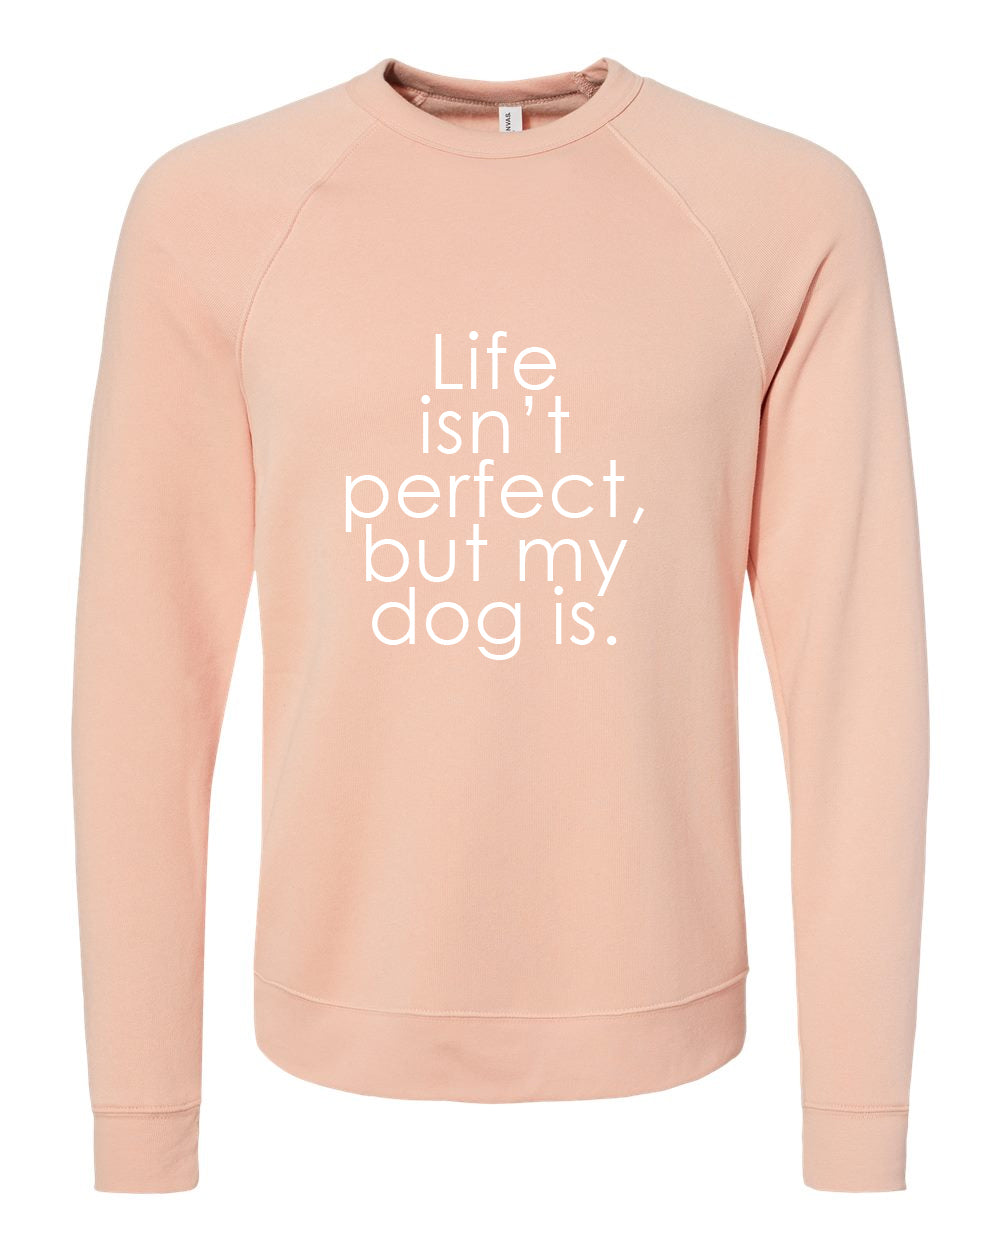 Sweatshirt: Crew Neck - Life isn't Perfect but my dog is